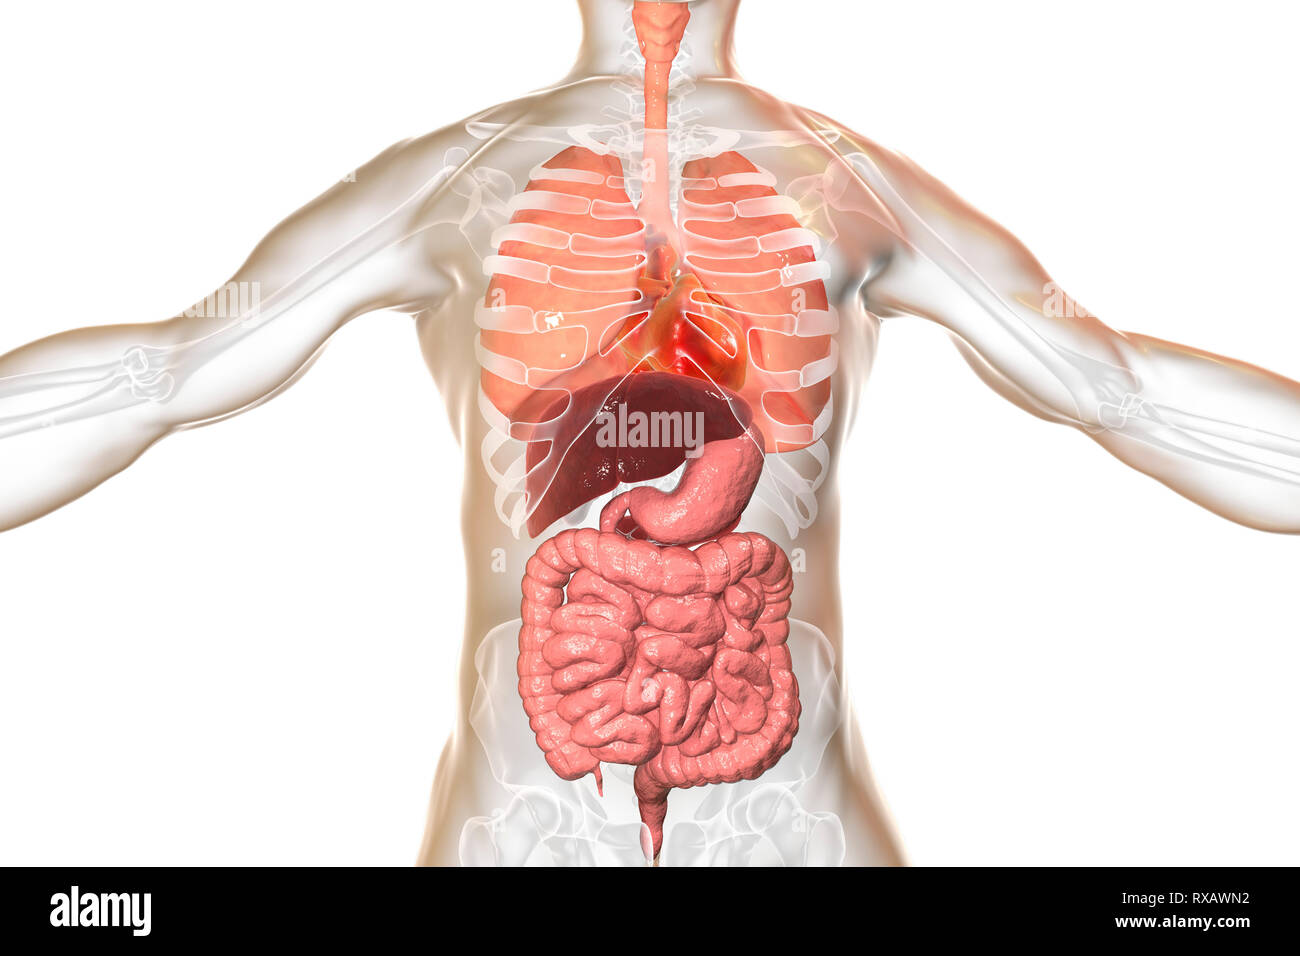 Illustration Of A Man S Internal Organs Stock Photo Alamy